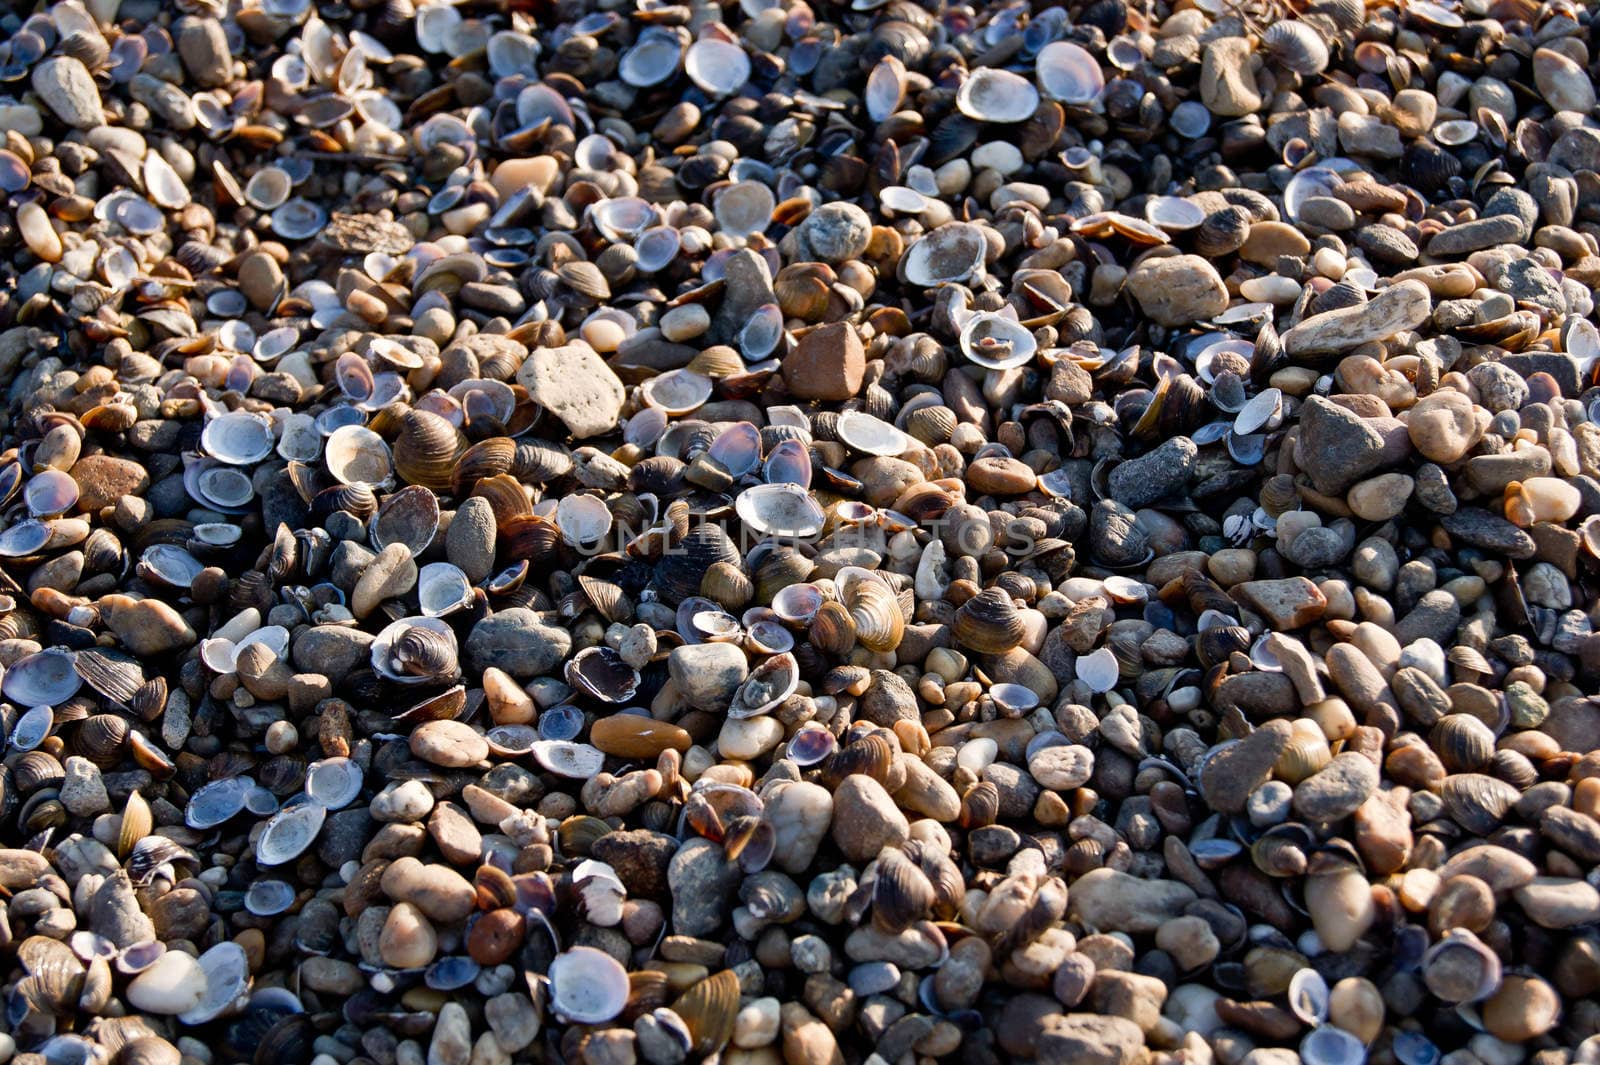 Shells and pebbles. by dadalia